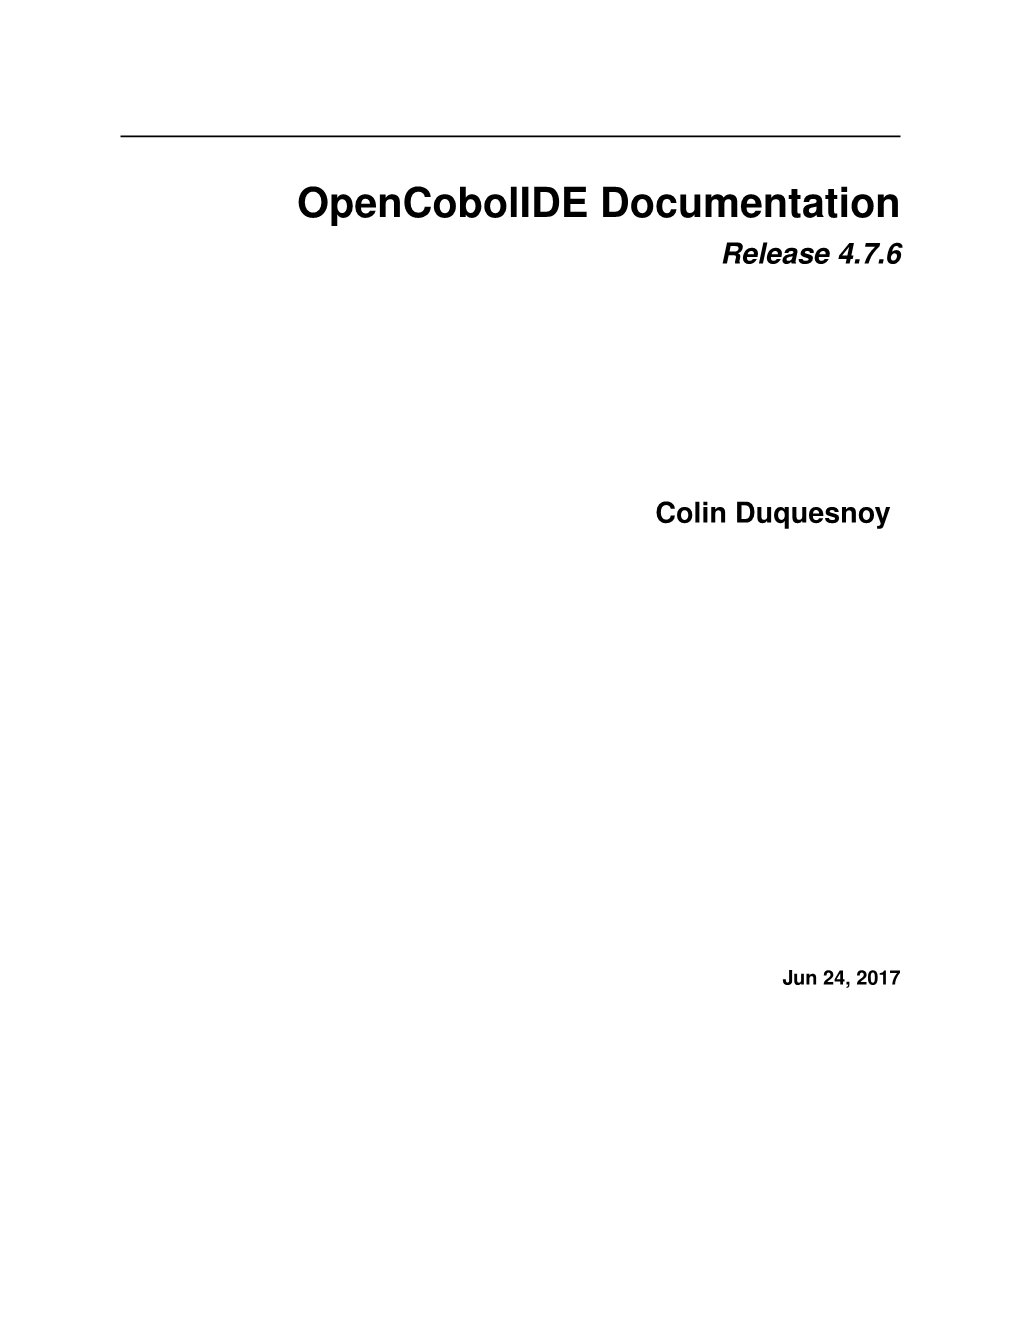 Opencobolide Documentation Release 4.7.6